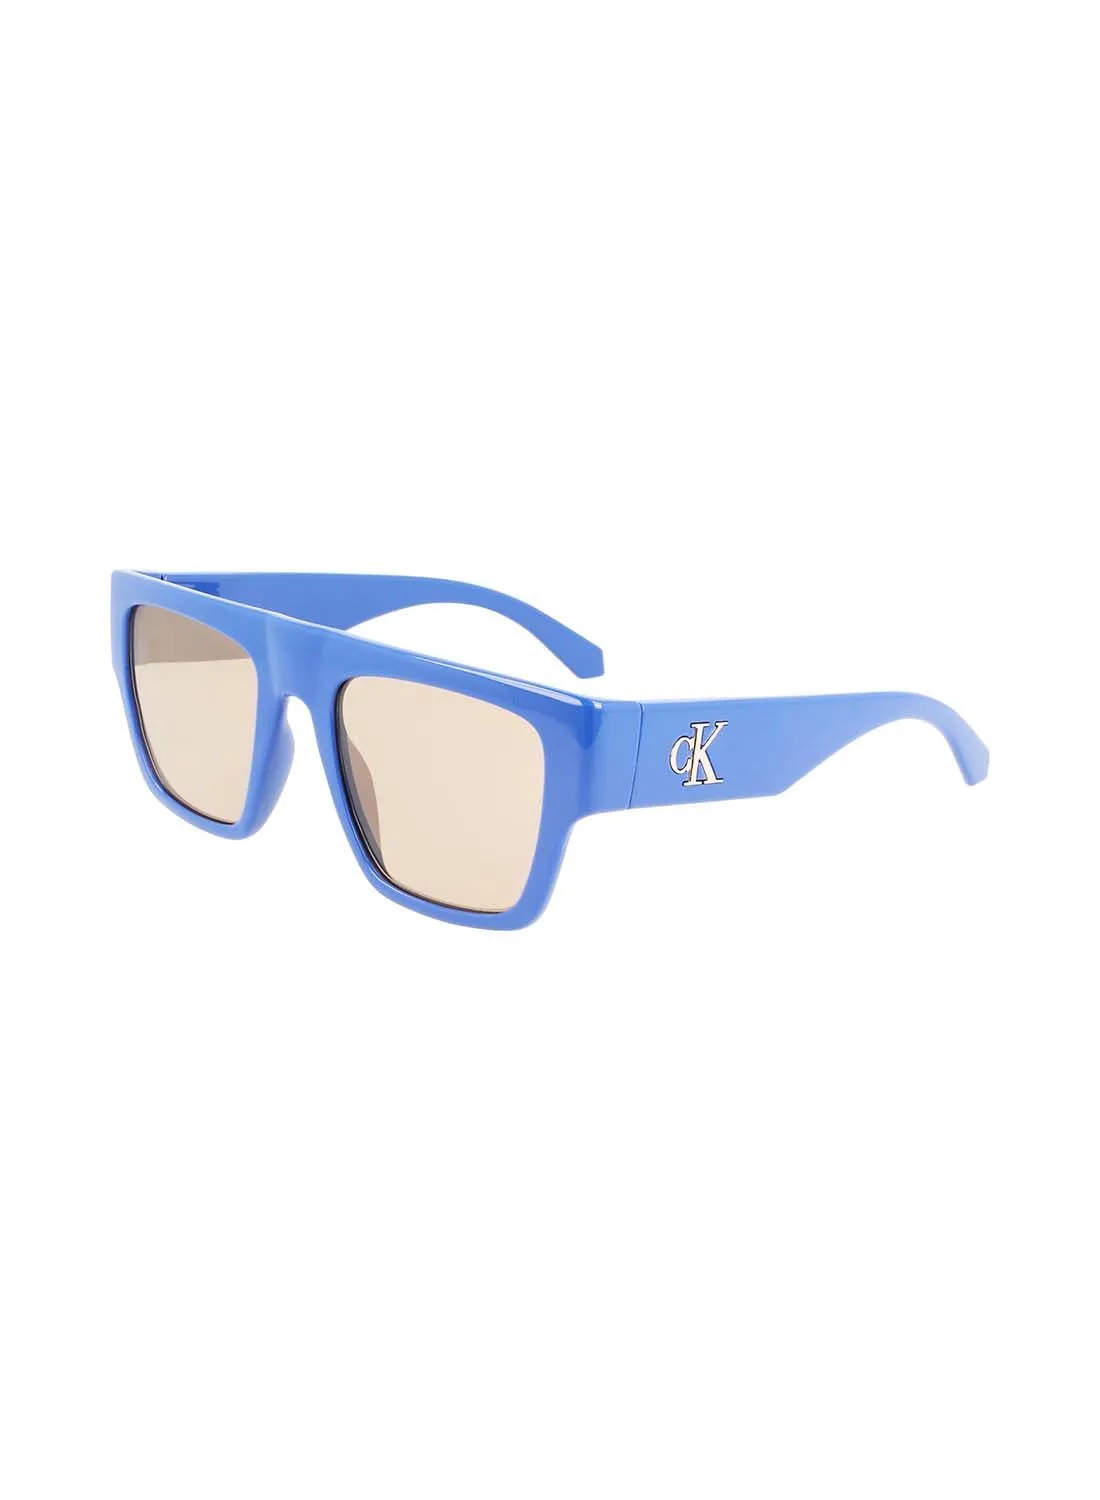 Calvin Klein Jeans Unisex Rectangular Sunglasses CKJ22636S-400-5321